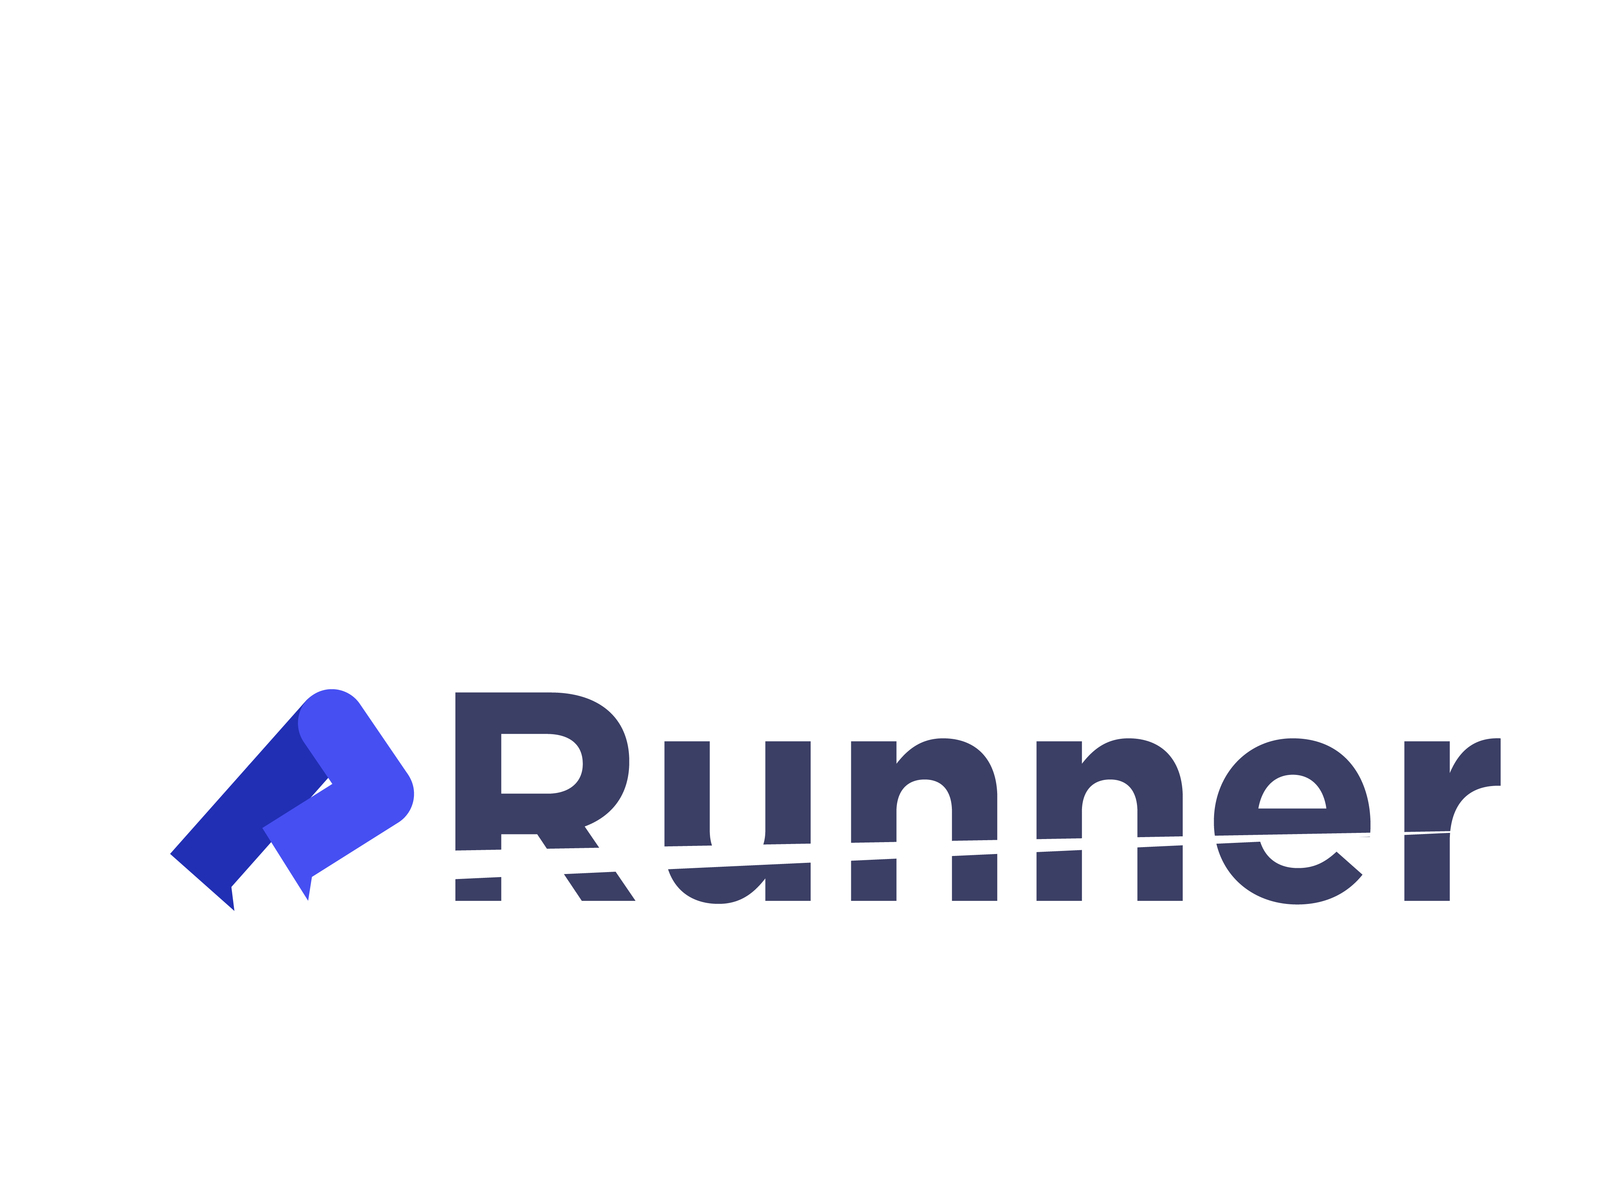 Runner Logo by Sai Bala on Dribbble